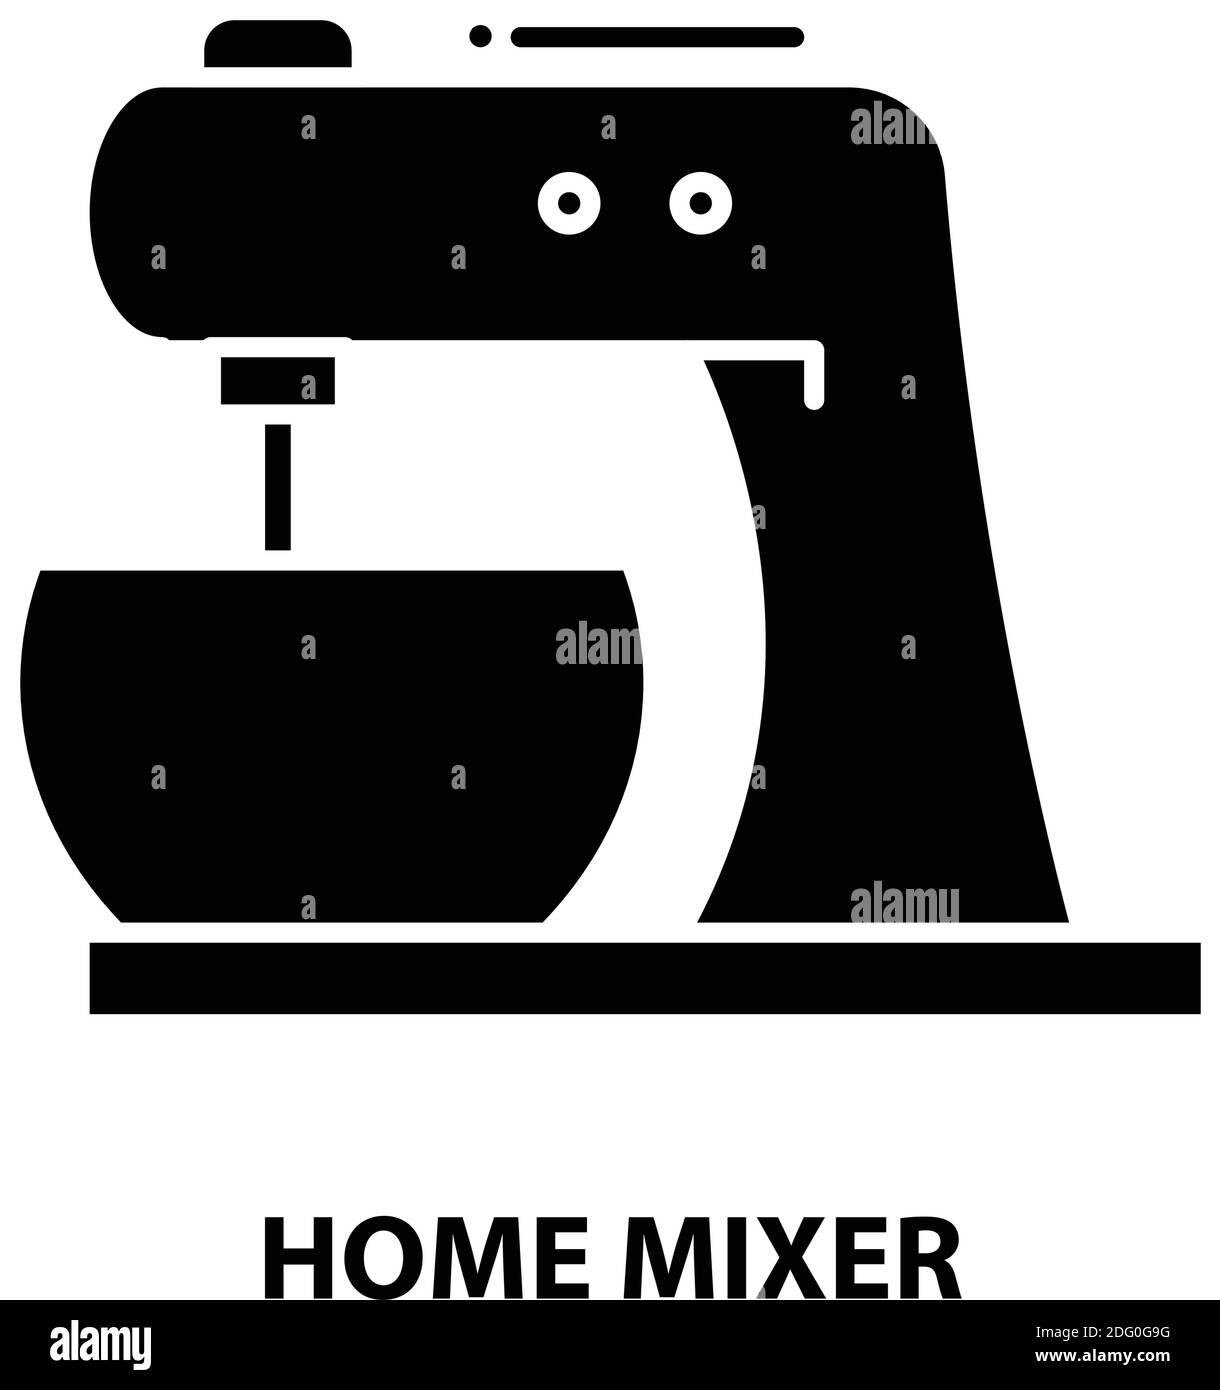 home mixer icon, black vector sign with editable strokes, concept illustration Stock Vector